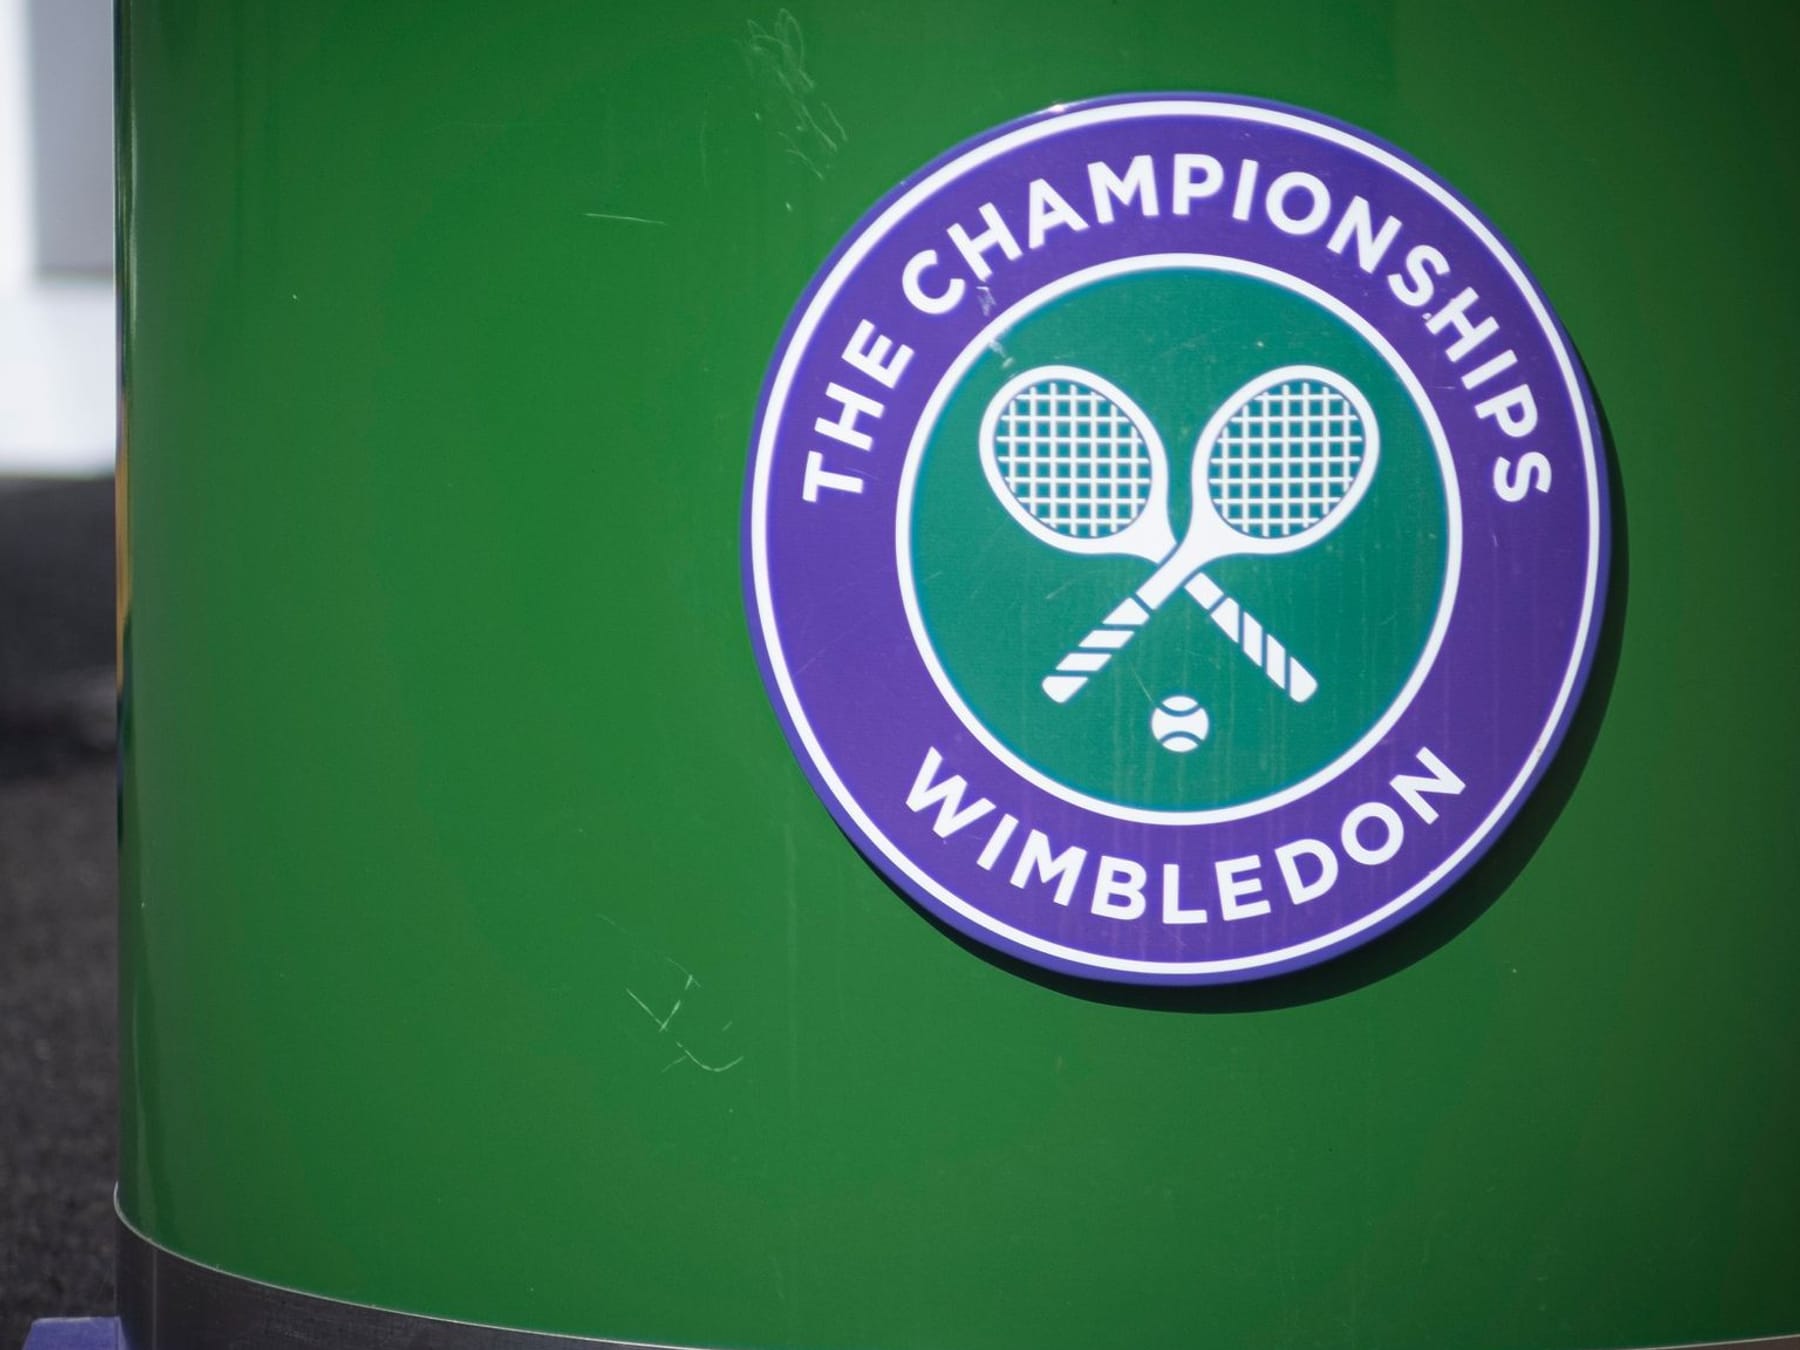 Tennis Wimbledon startet großen KI-Aufschlag